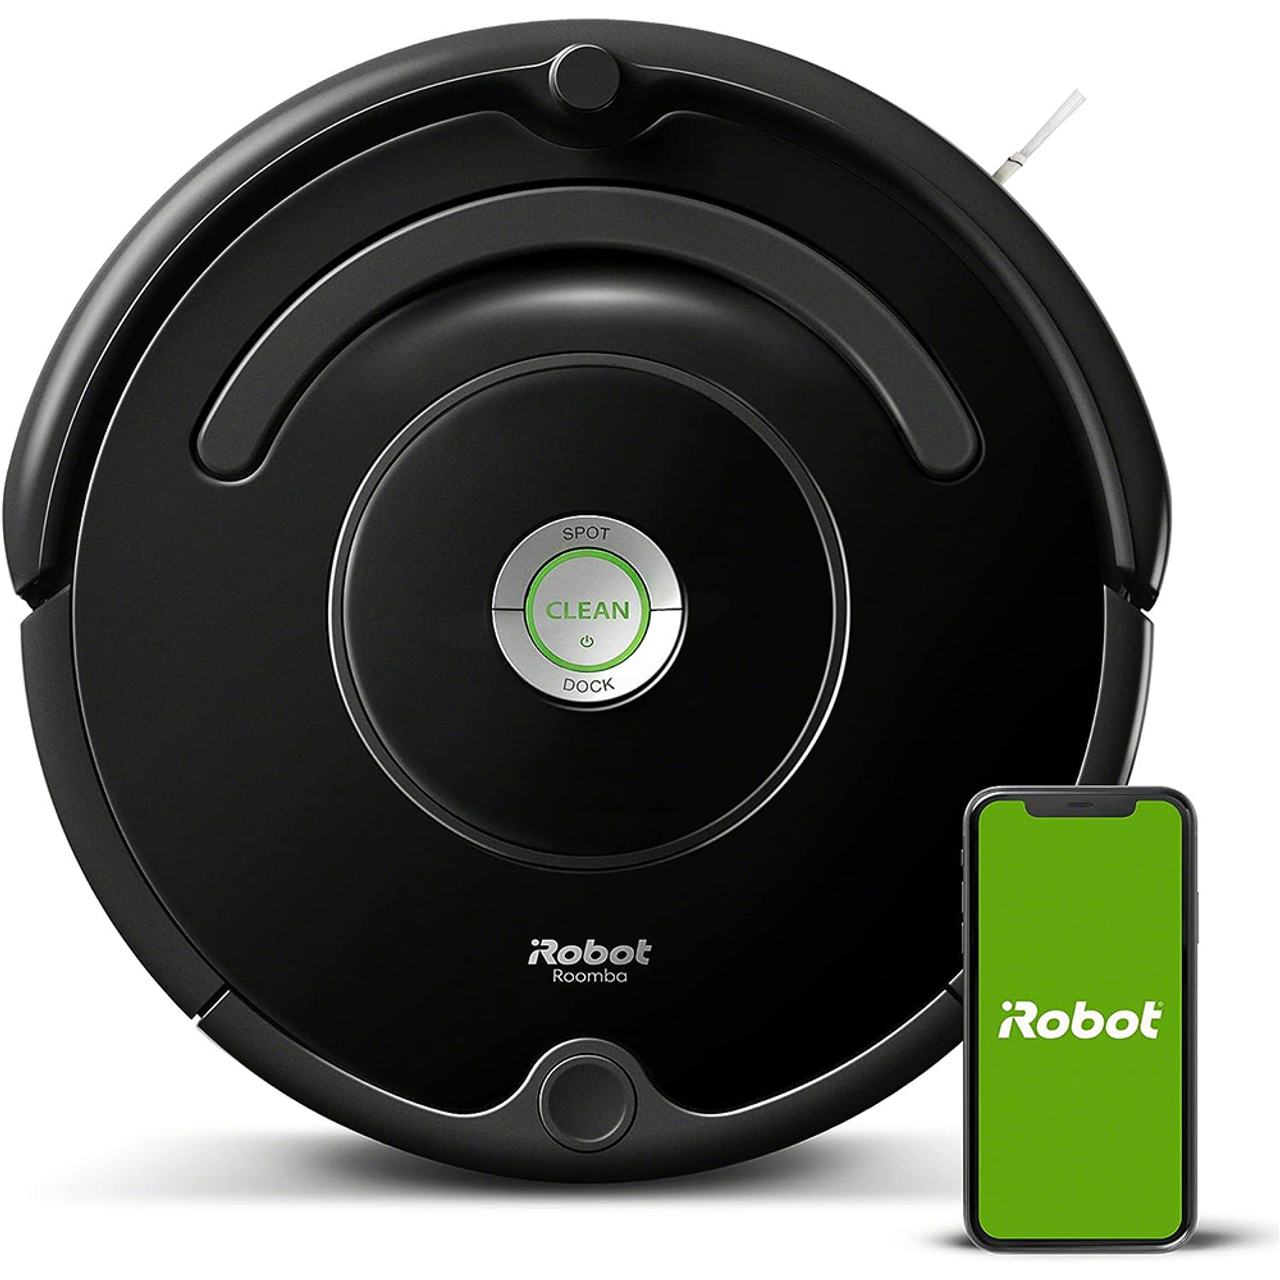 iRobot® Roomba® 675 Robot Vacuum product image